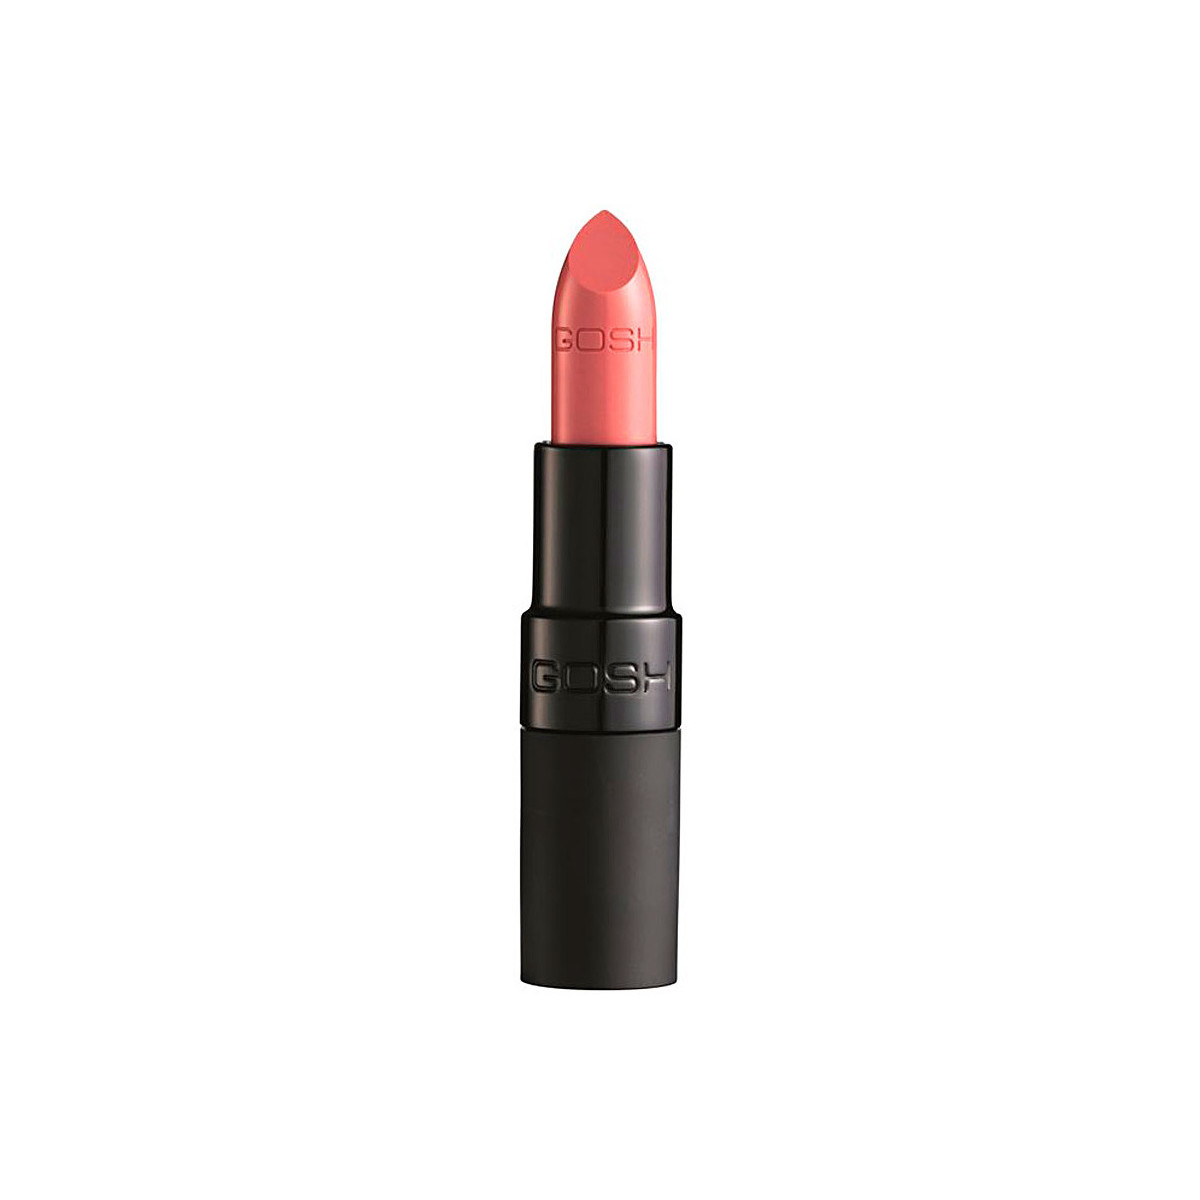 Beauté Femme Anatomic & Co Velvet Touch Lipstick 002-matt Rose 